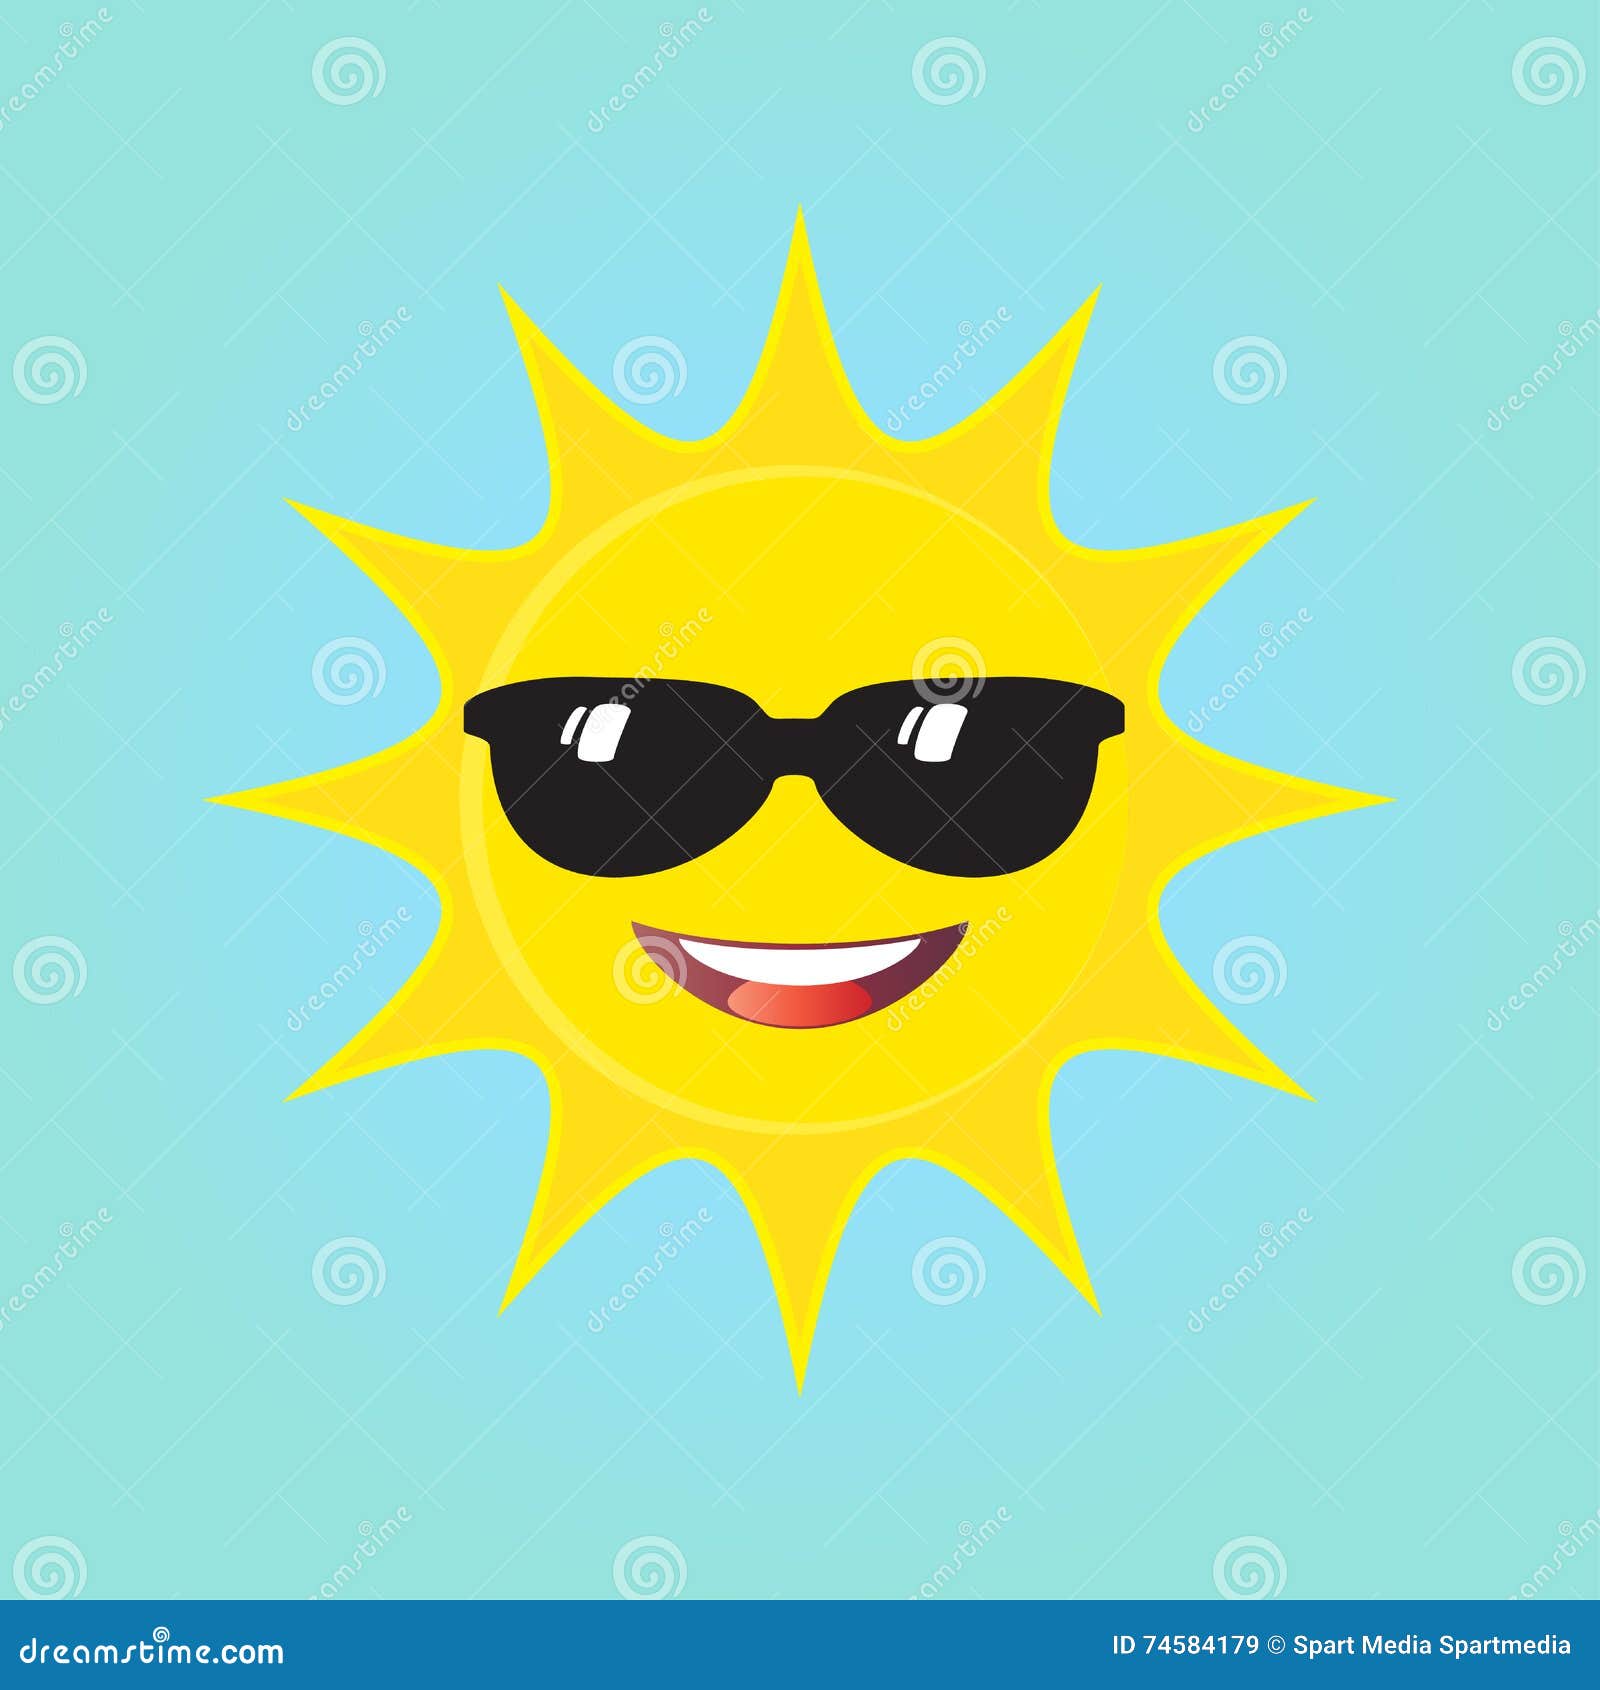 Anthropomorphic Sun with Sunglasses - Vector Image